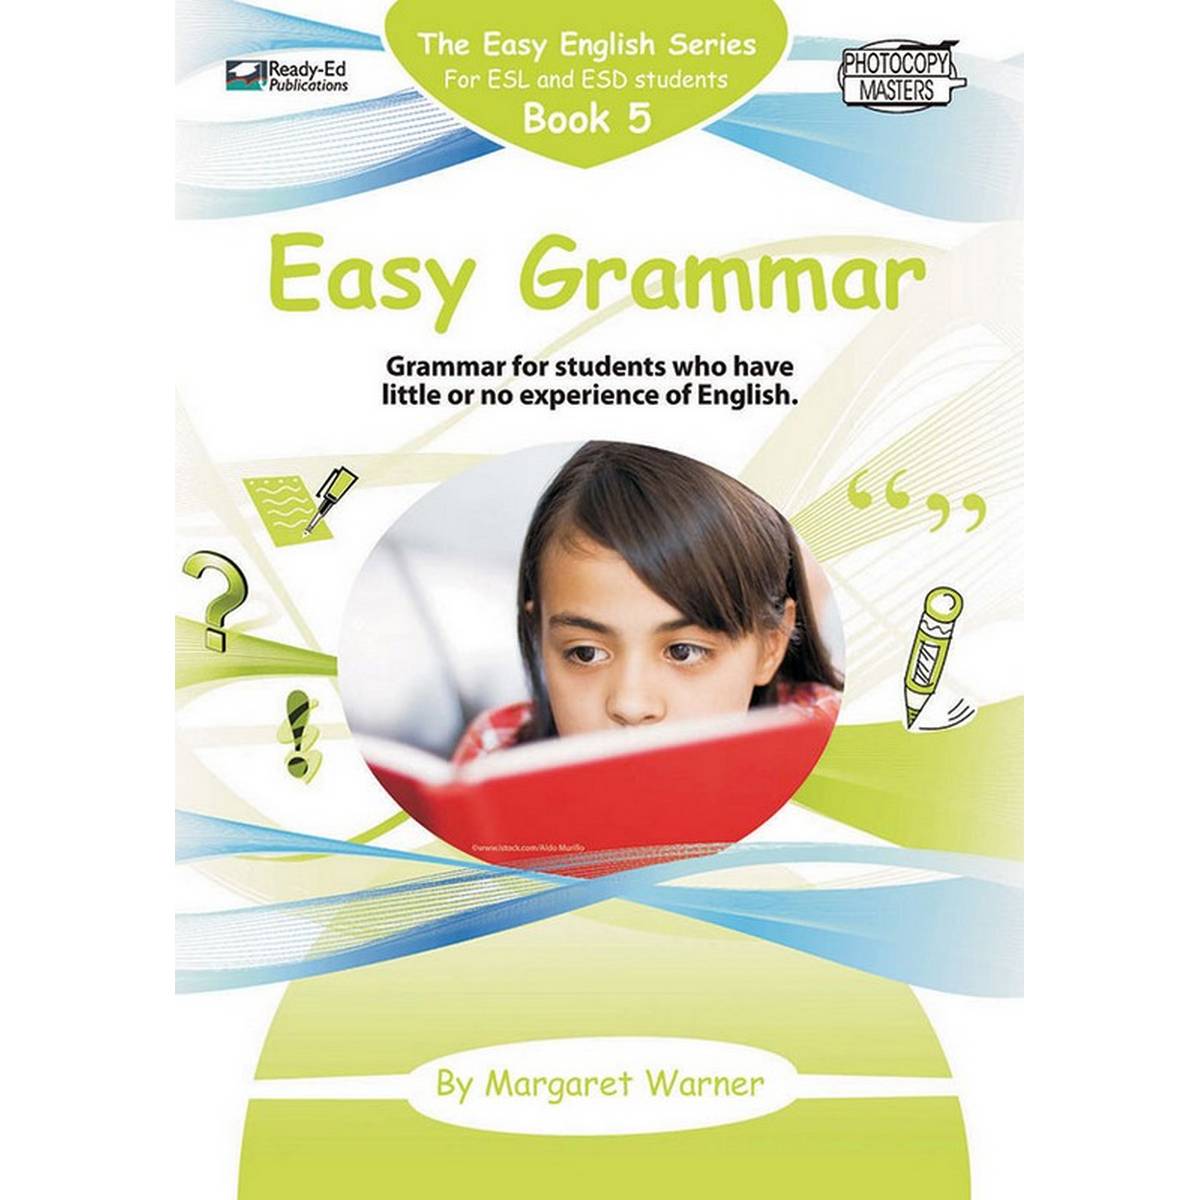 Easy English Series Book 5 Easy Grammar